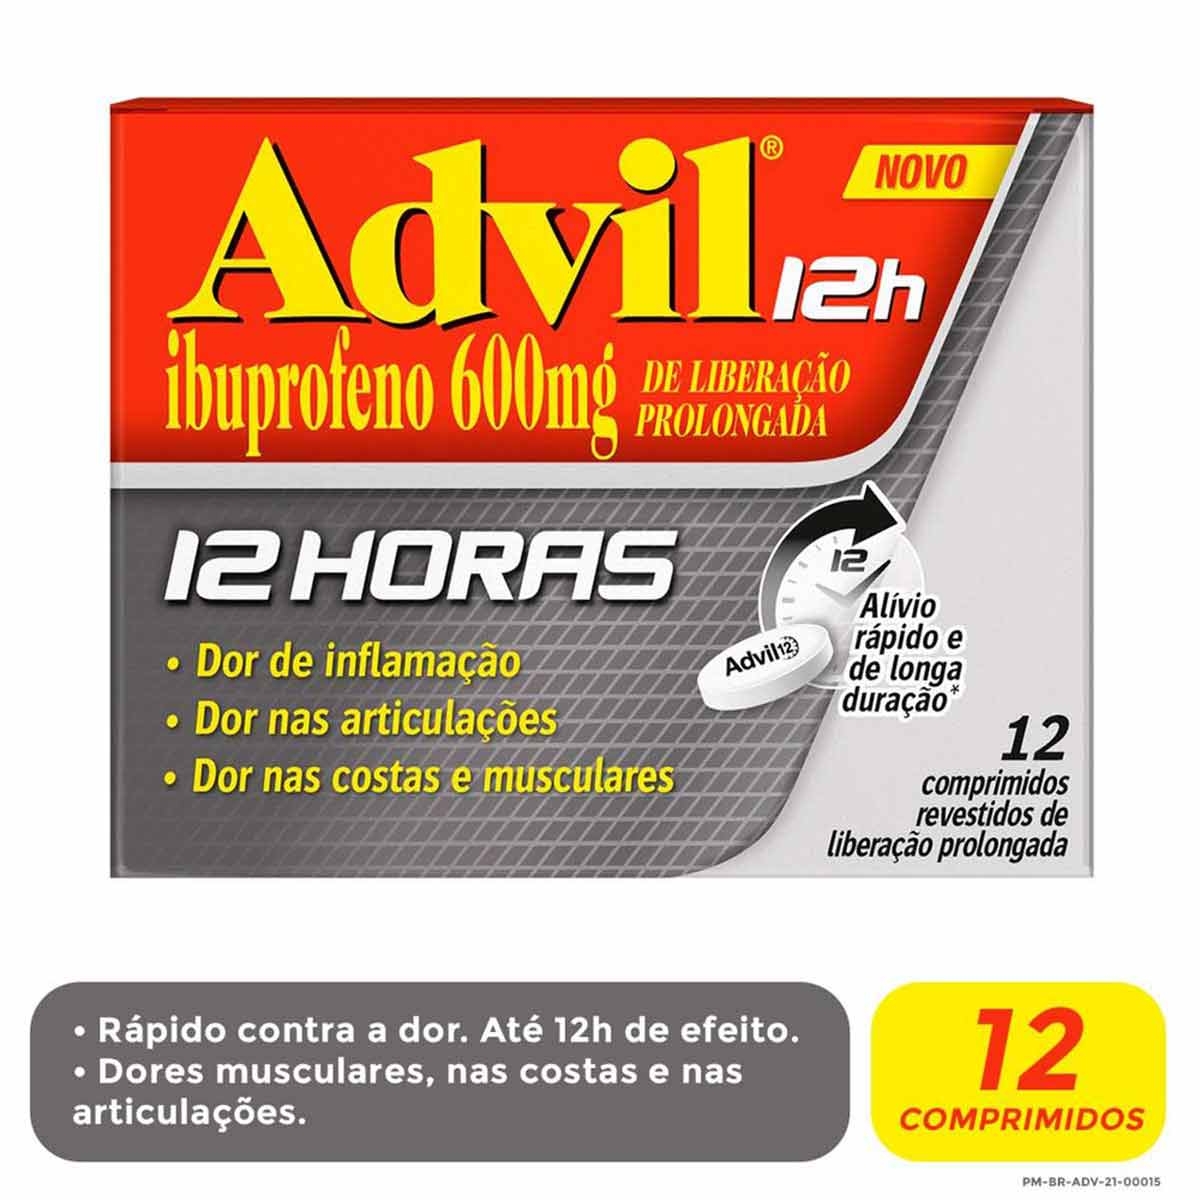 Advil Ibuprofeno 600mg 12 comprimidos